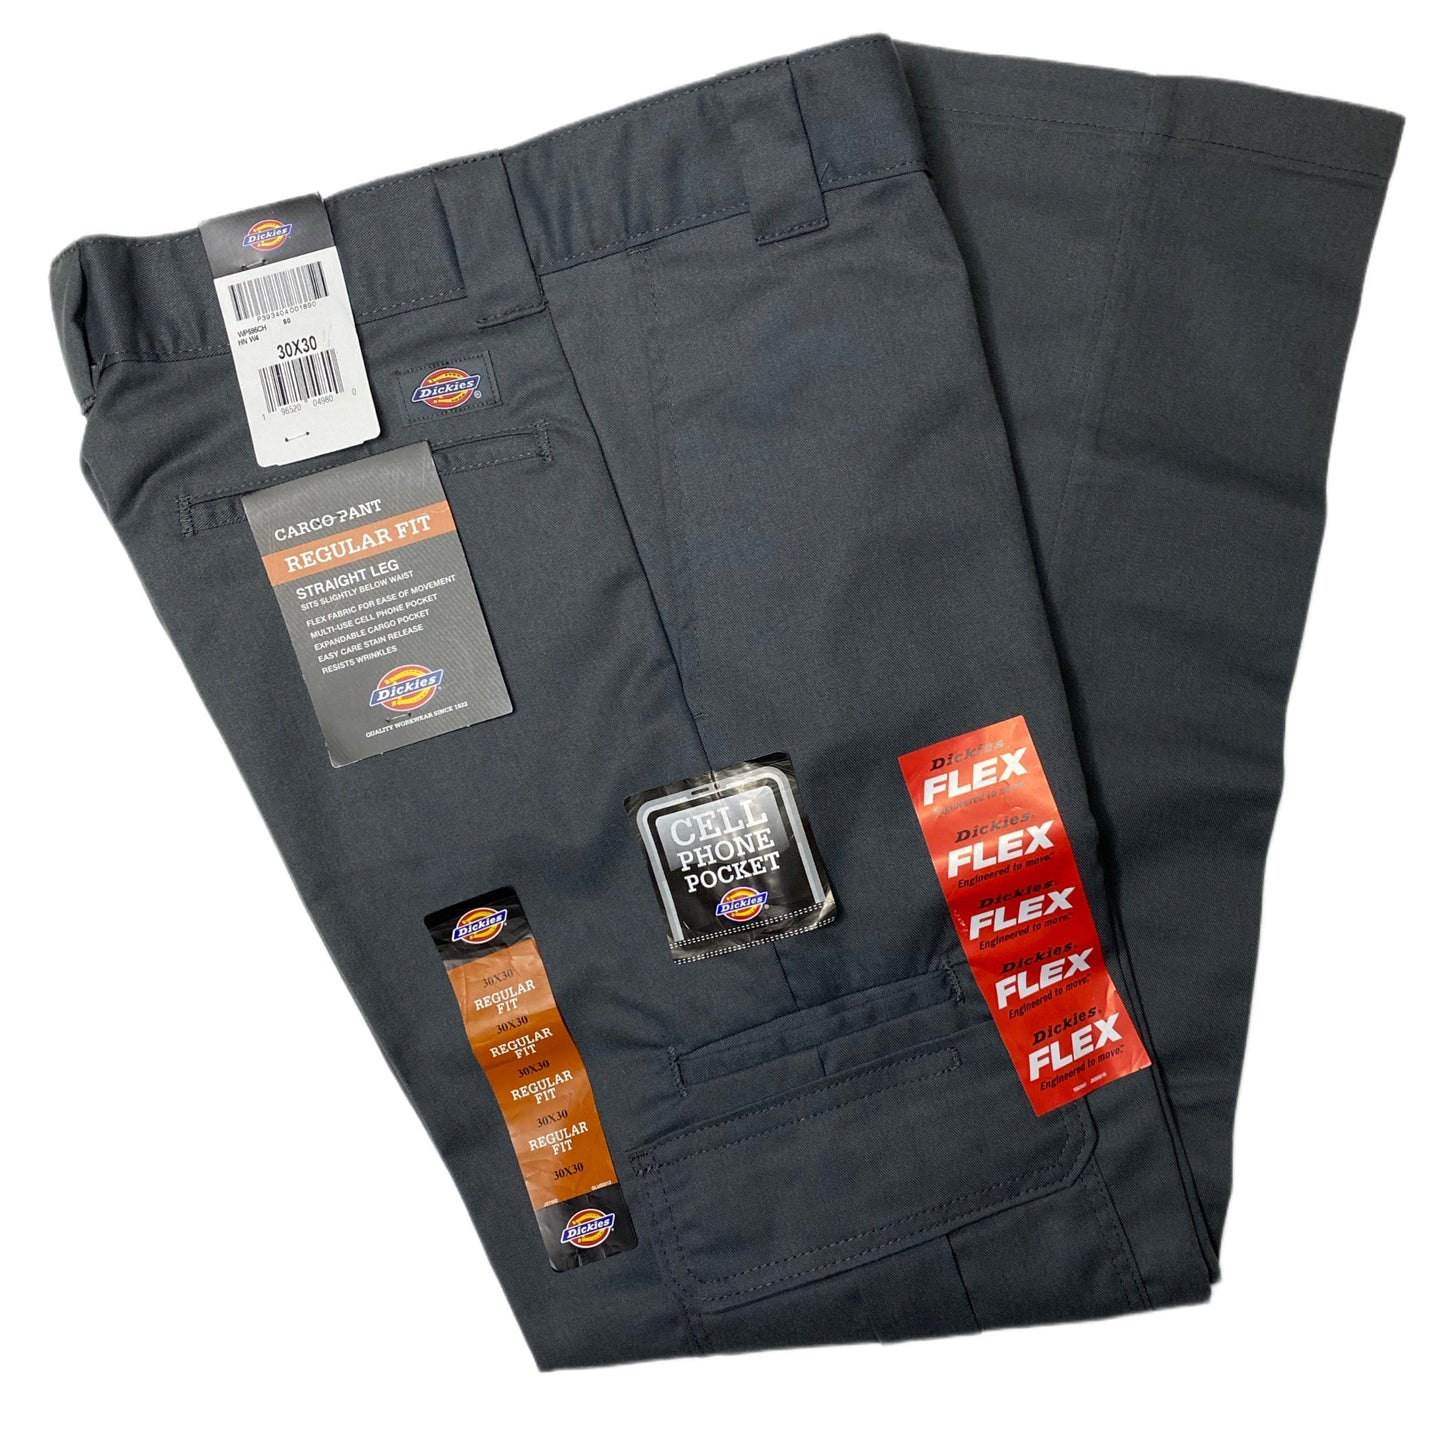 W/S Dickies Cargo Pants Regular Fit 30th Length